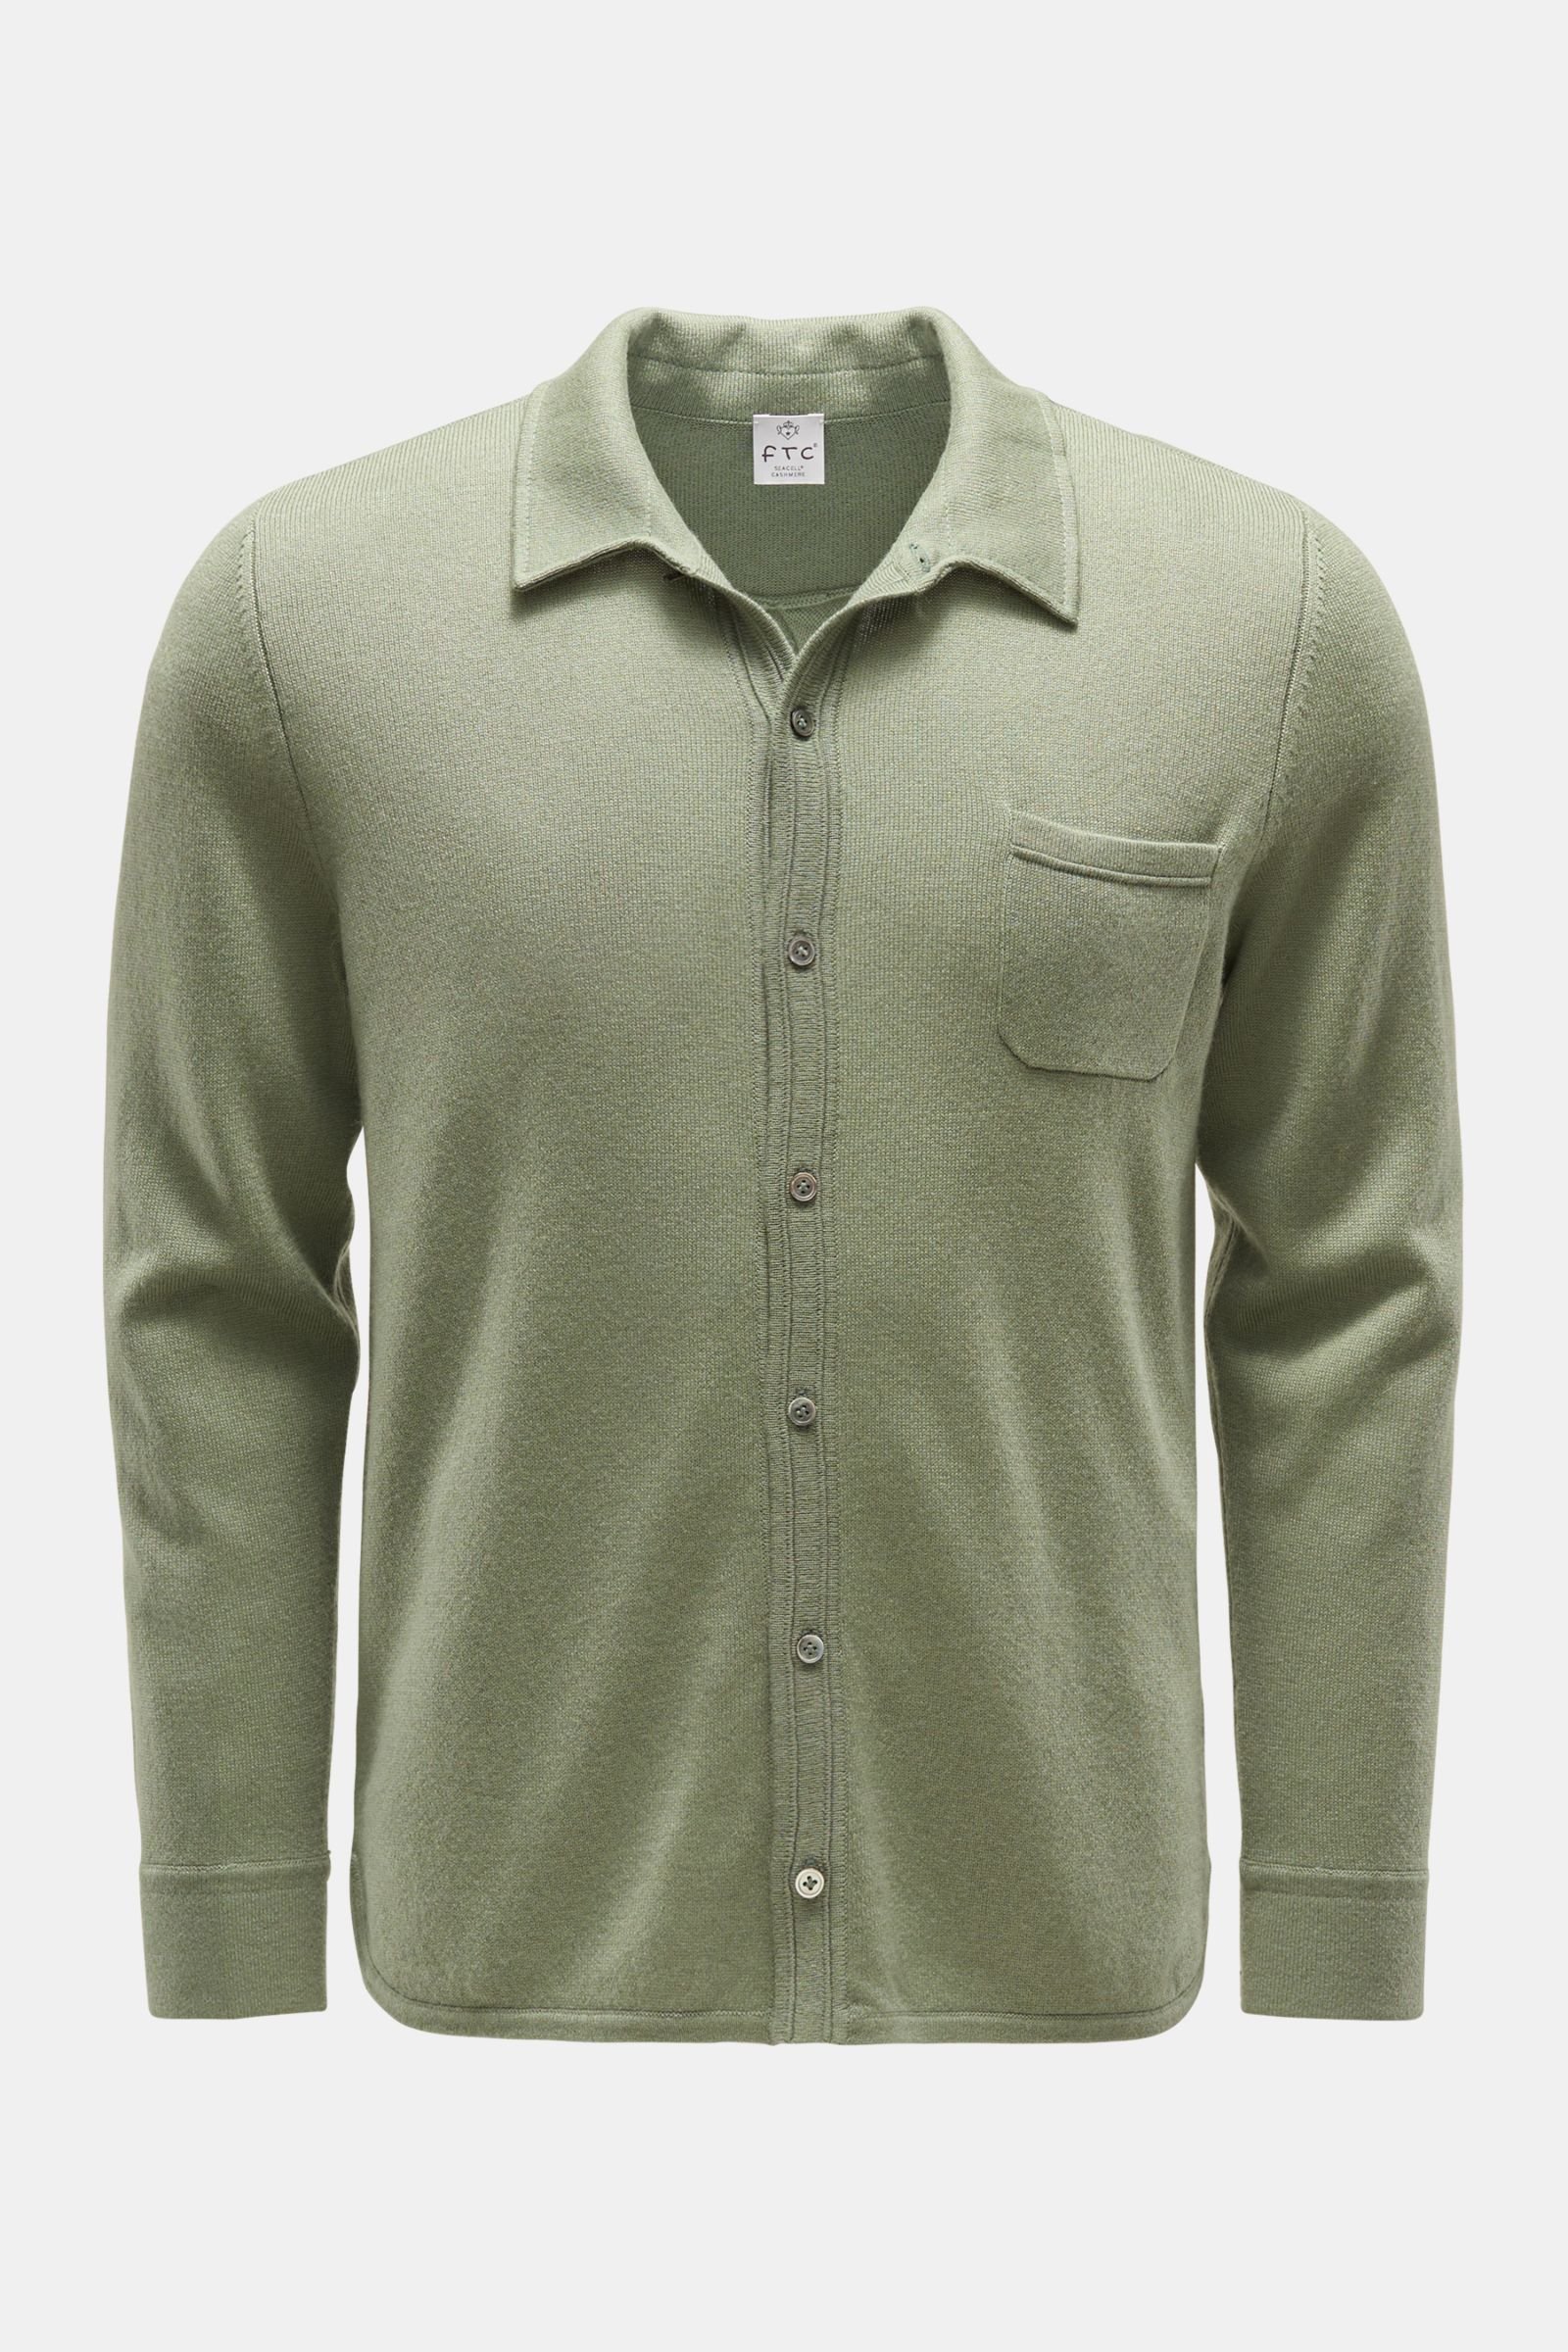 Overshirt grey-green